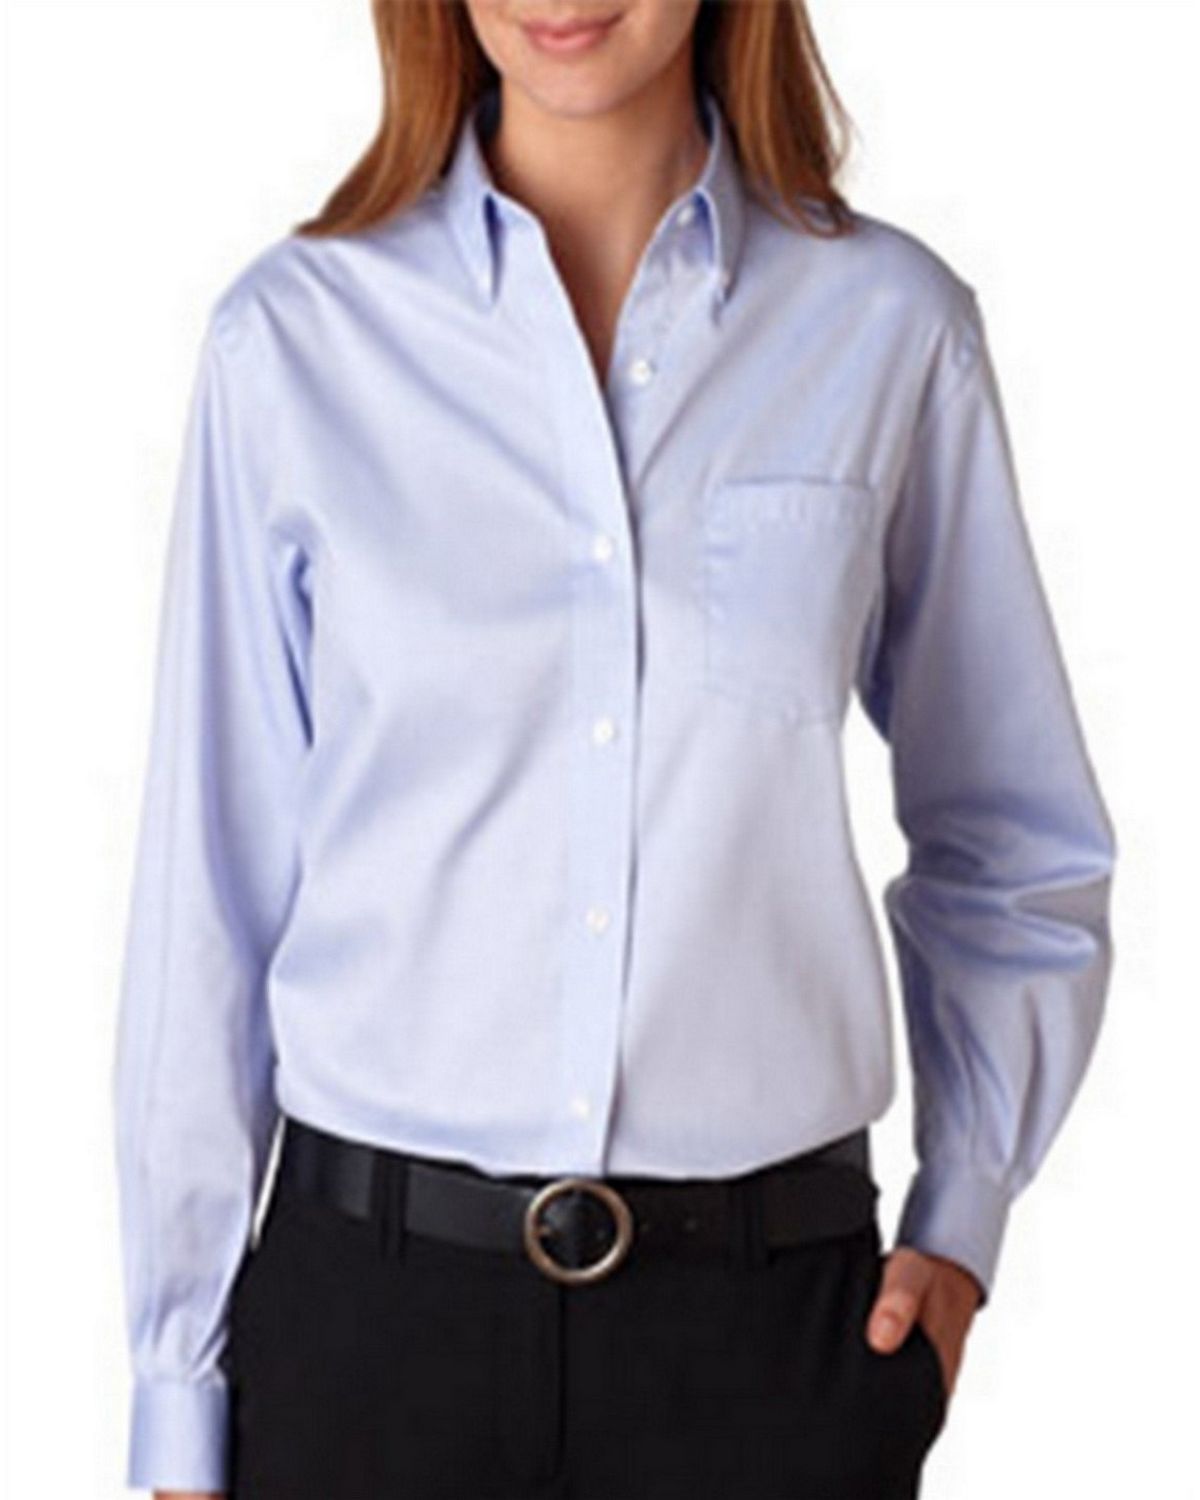 Van Heusen V0110 Ladies’ Oxford Shirt - ApparelnBags.com